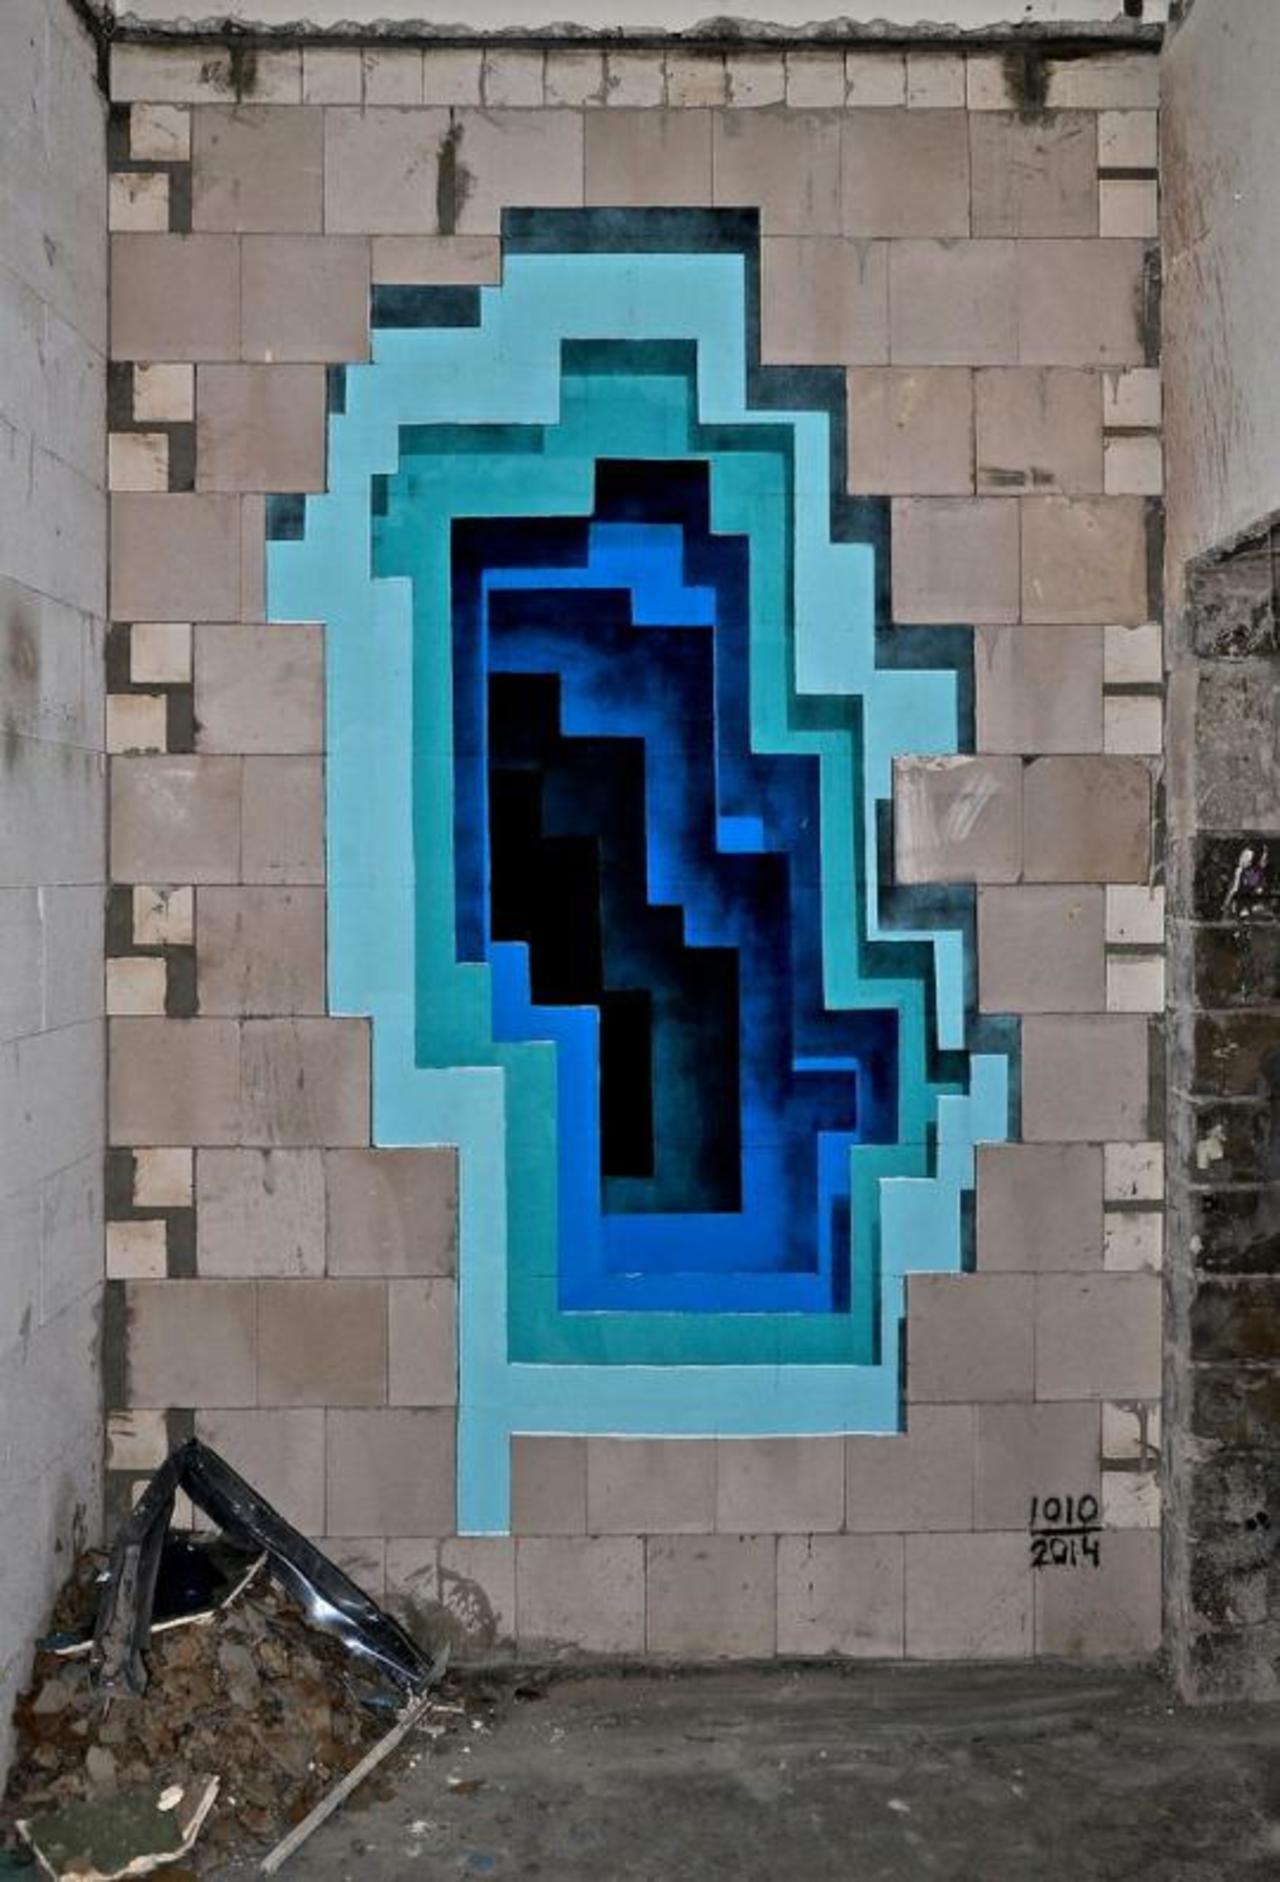 Arte Urbano del artista alemán 1010 (http://goo.gl/kem4e2) #streetart #mural #graffiti #artist http://t.co/3JSluzAk49